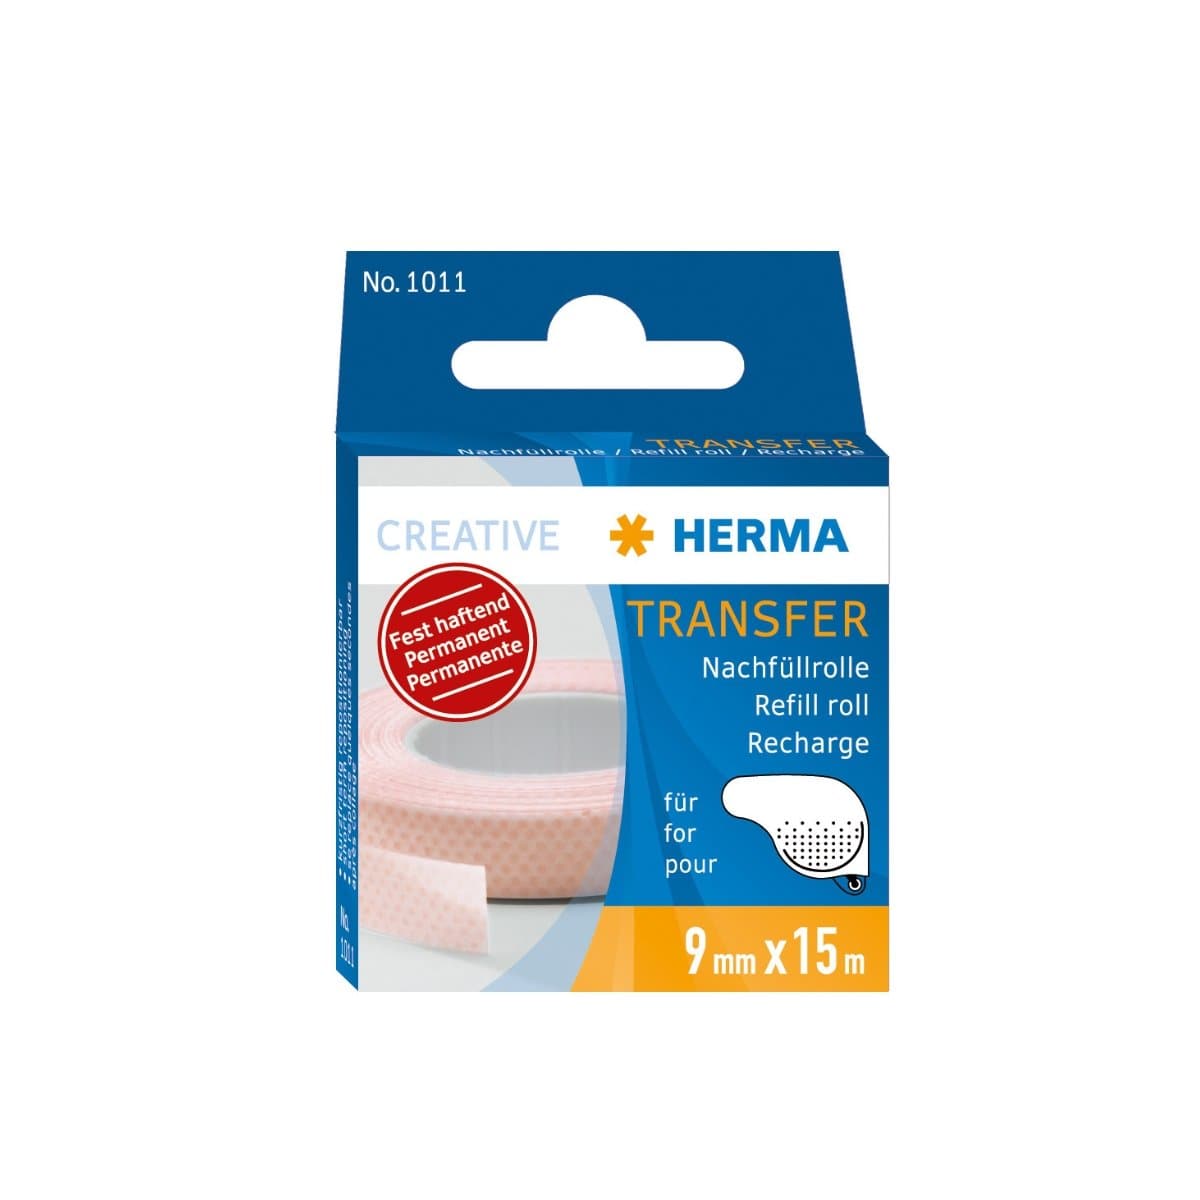 Herma Transfer Glue Refill, permanent, 9 mm x 15 m